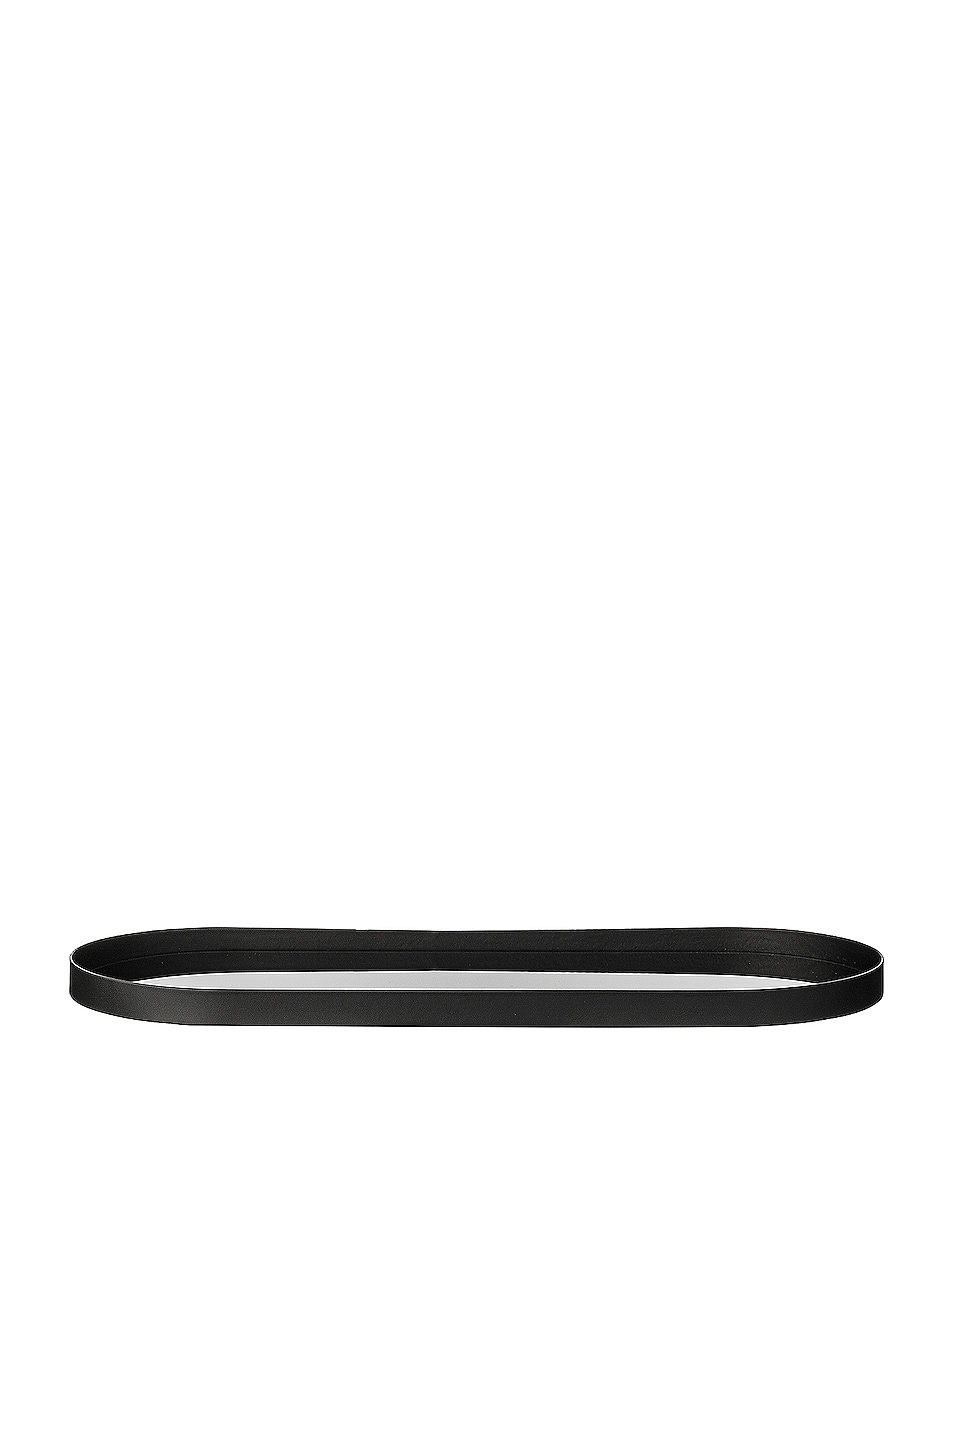 Image 1 of AYTM Margo Mirror Tray in Black